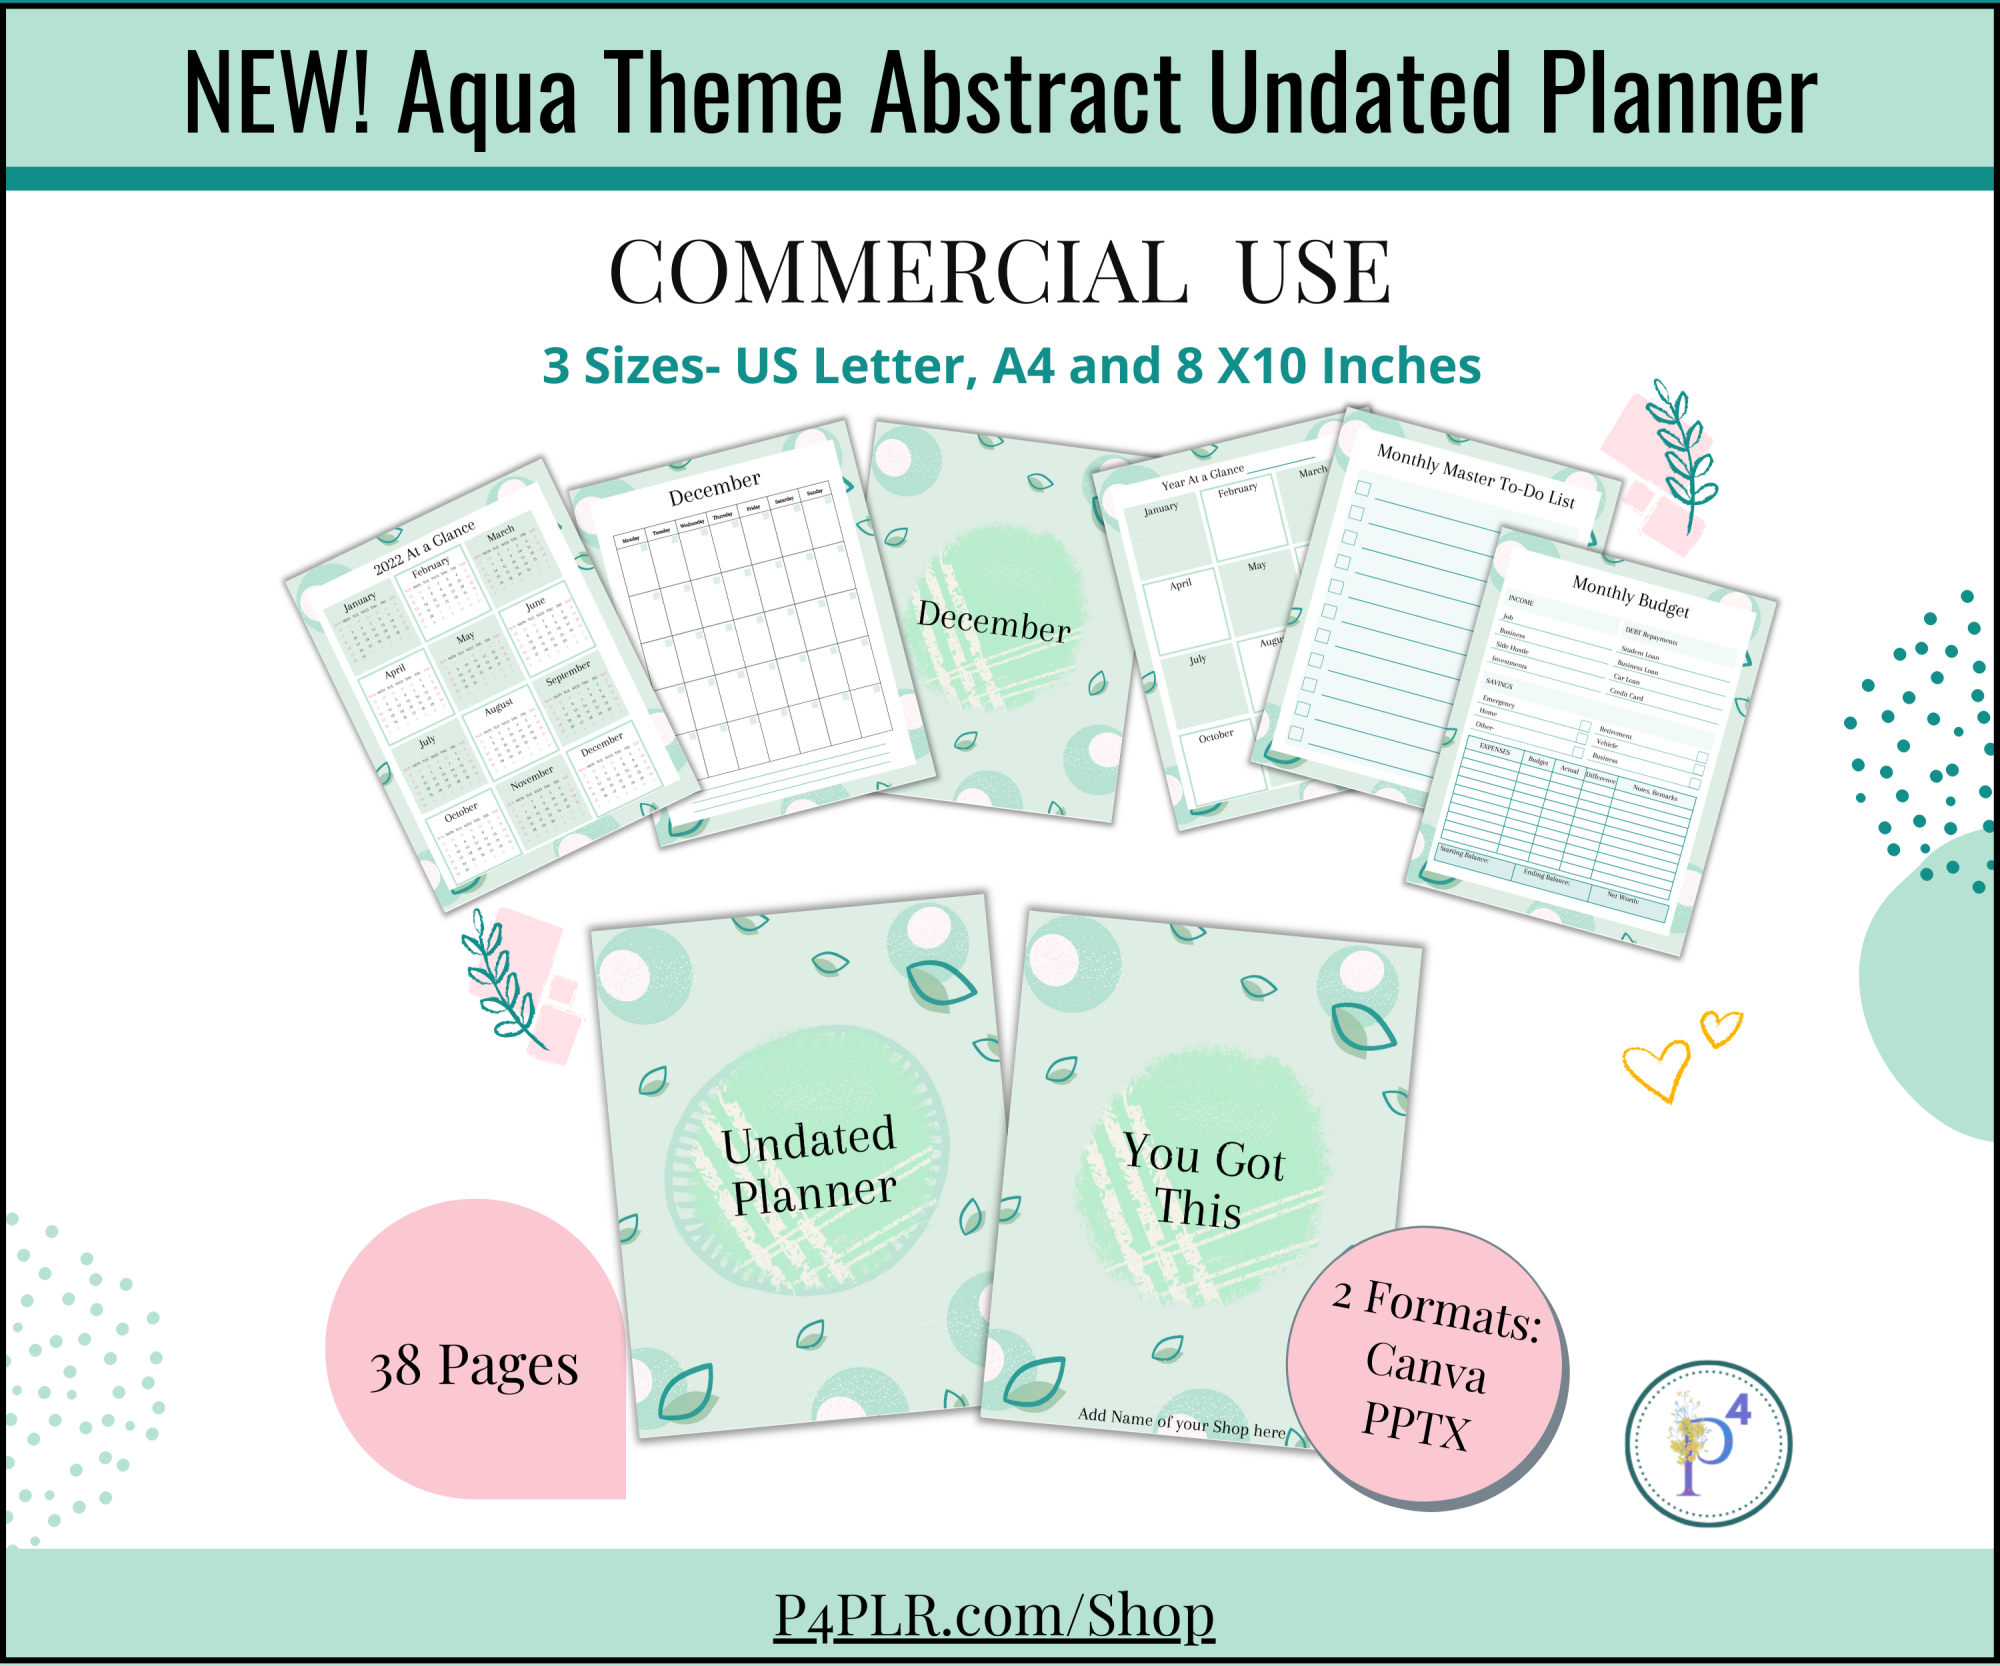 Aqua Theme Abstract Undated Planner (Basic)